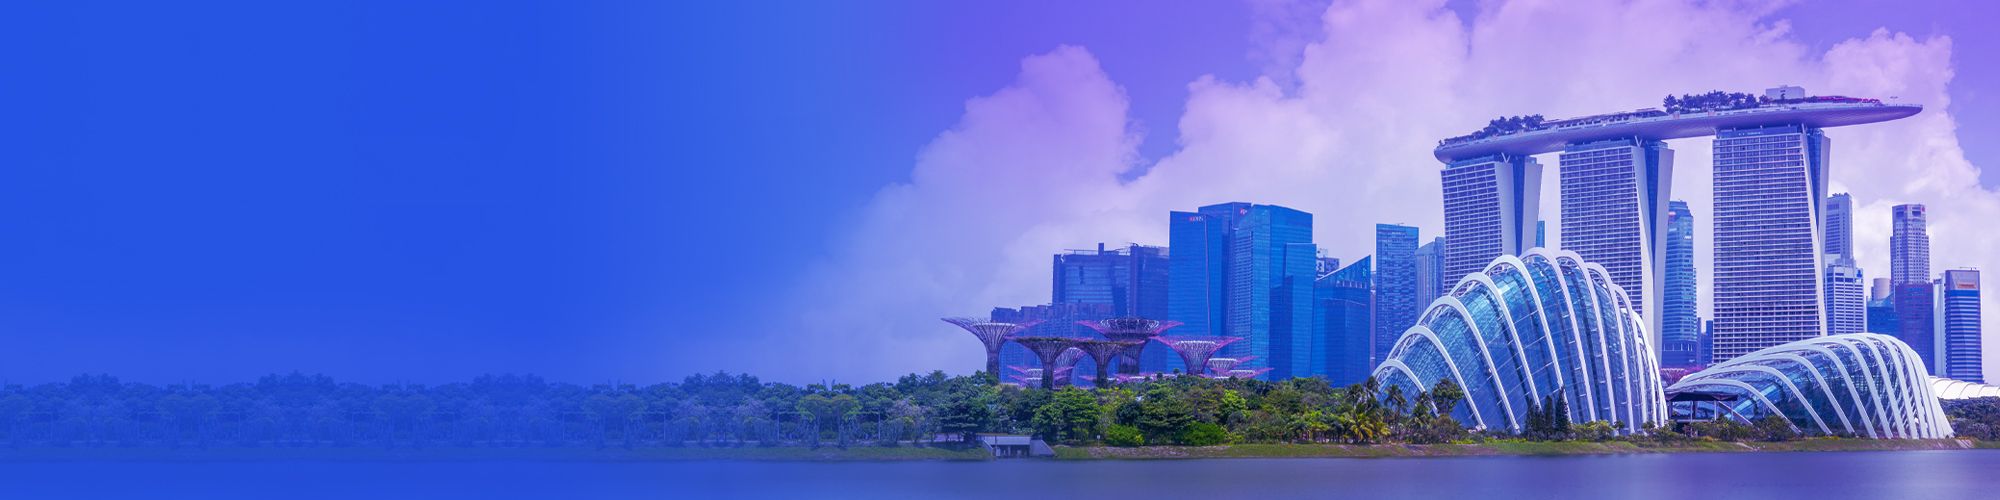 Waterfront shot of Singapore harbor